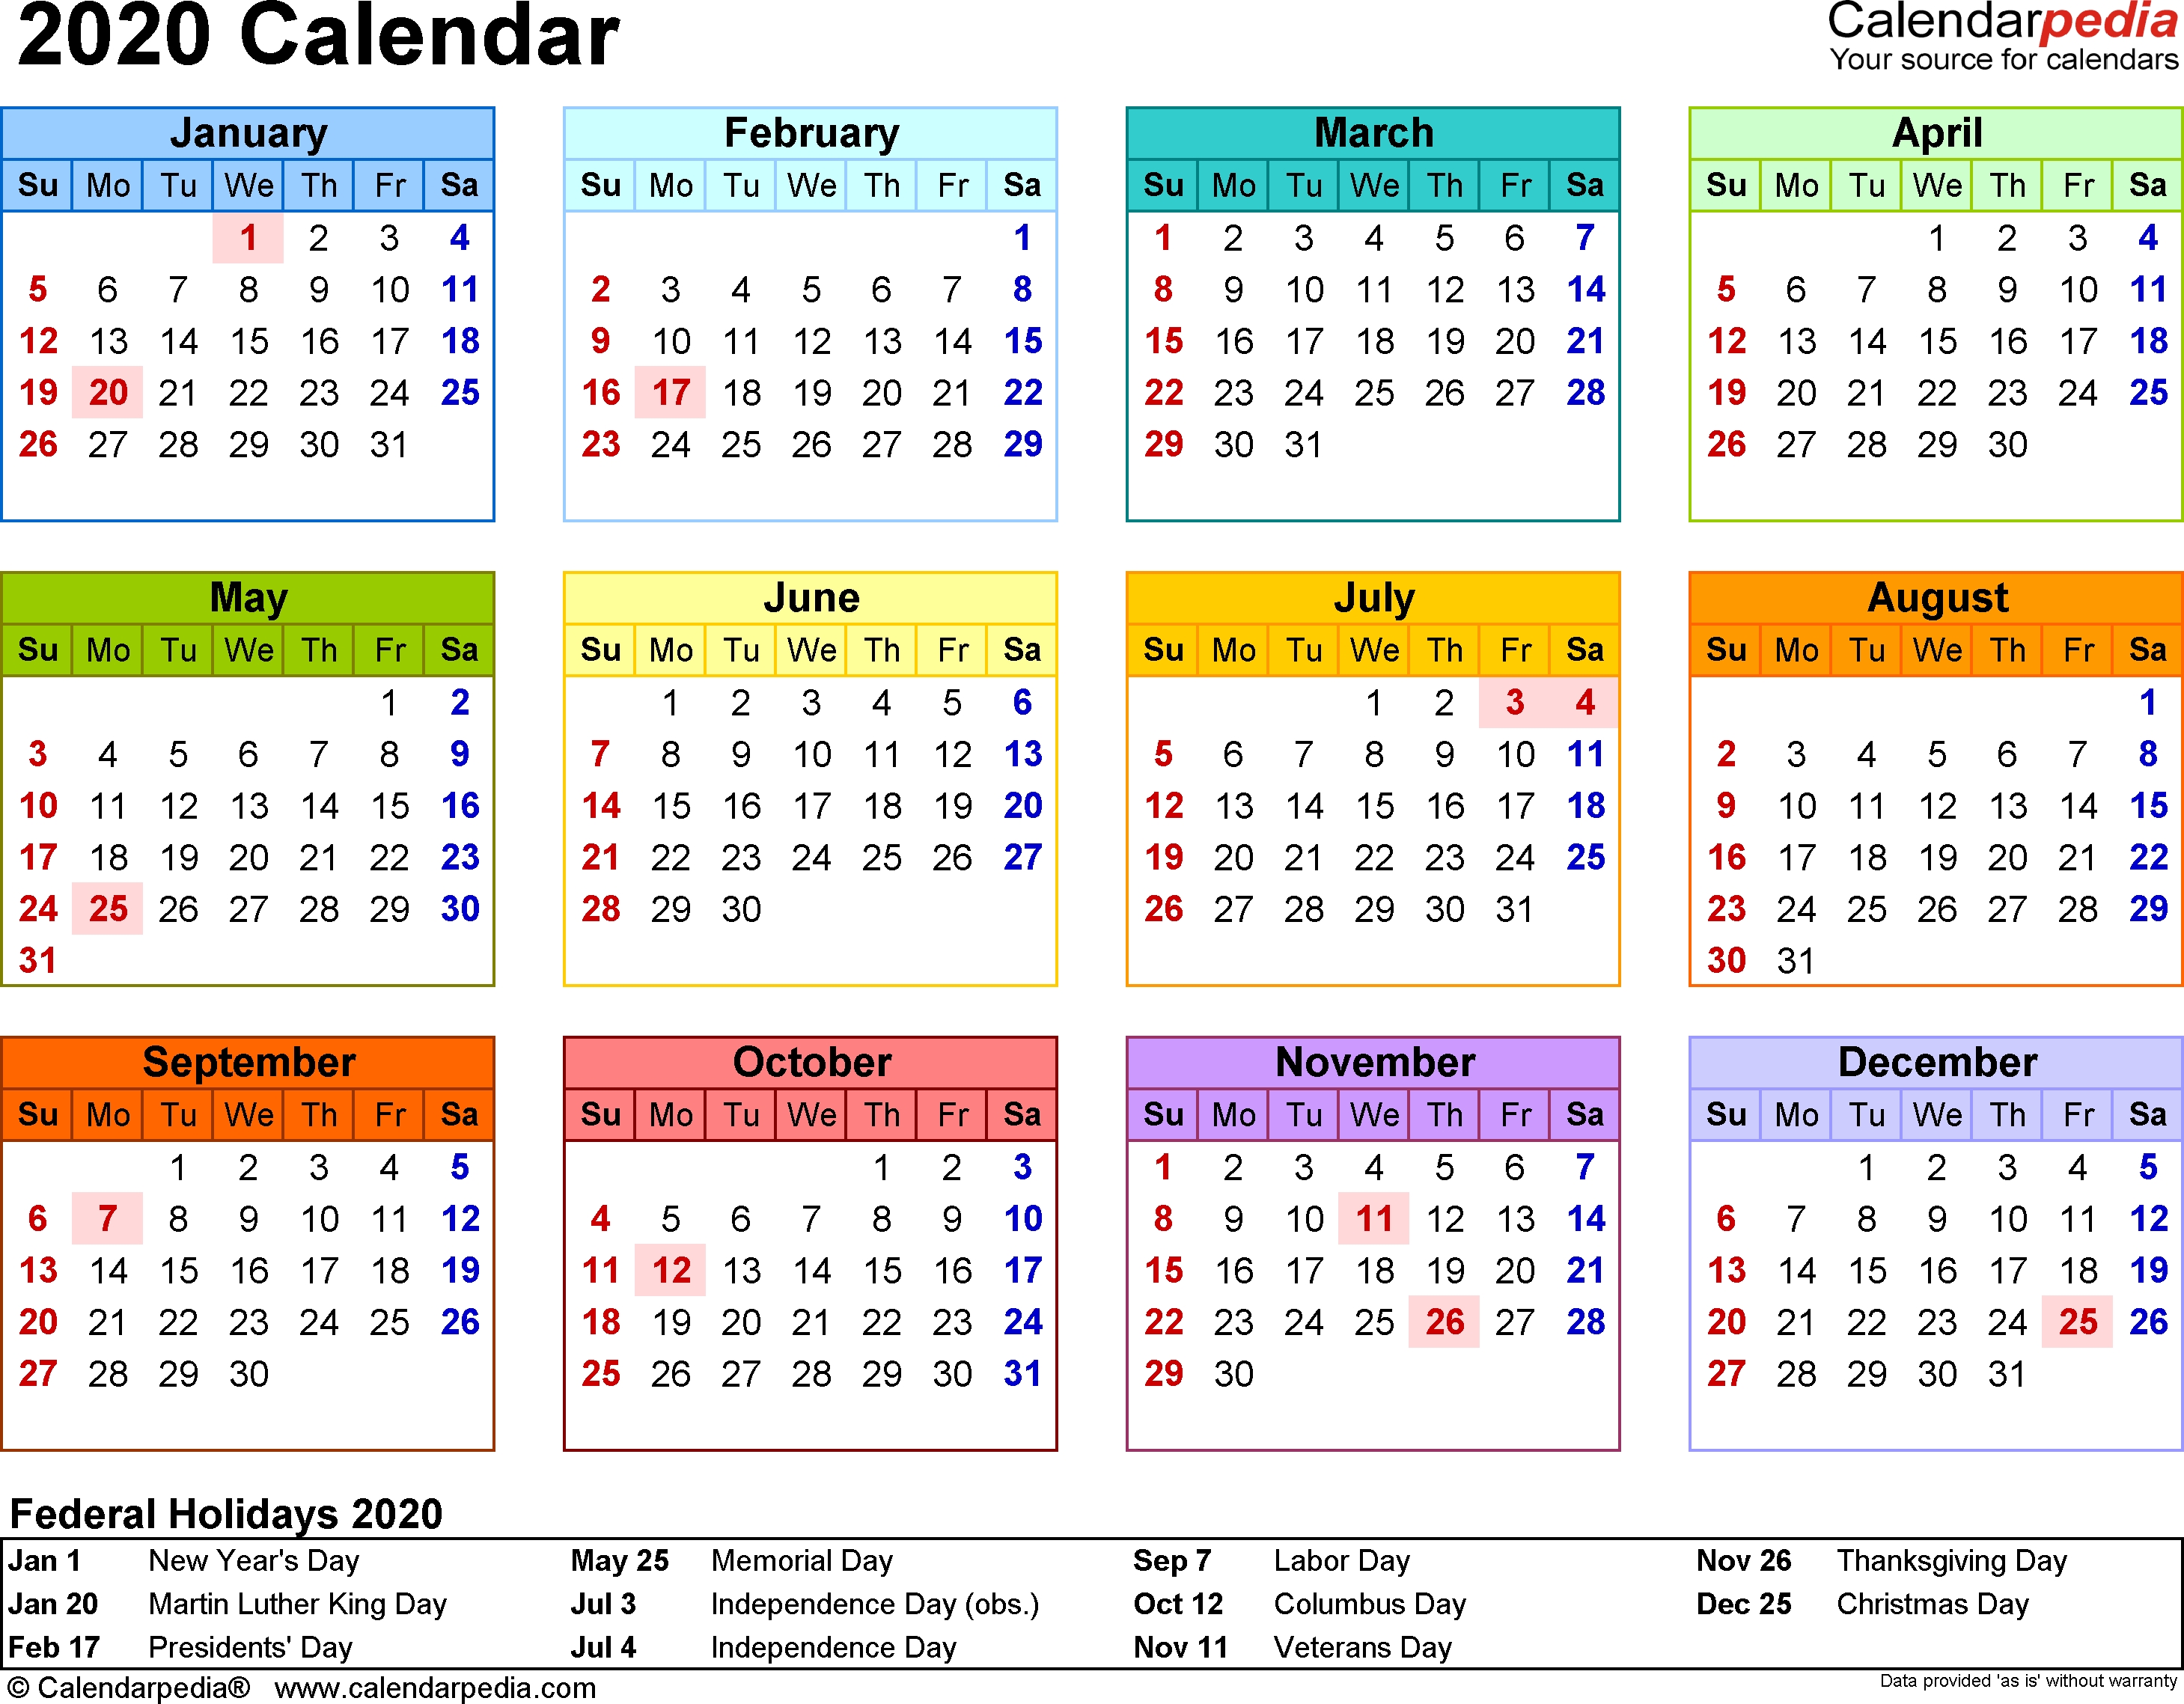 2020 Calendar Pdf - 17 Free Printable Calendar Templates Perky 2020 Calendar Year At A Glance